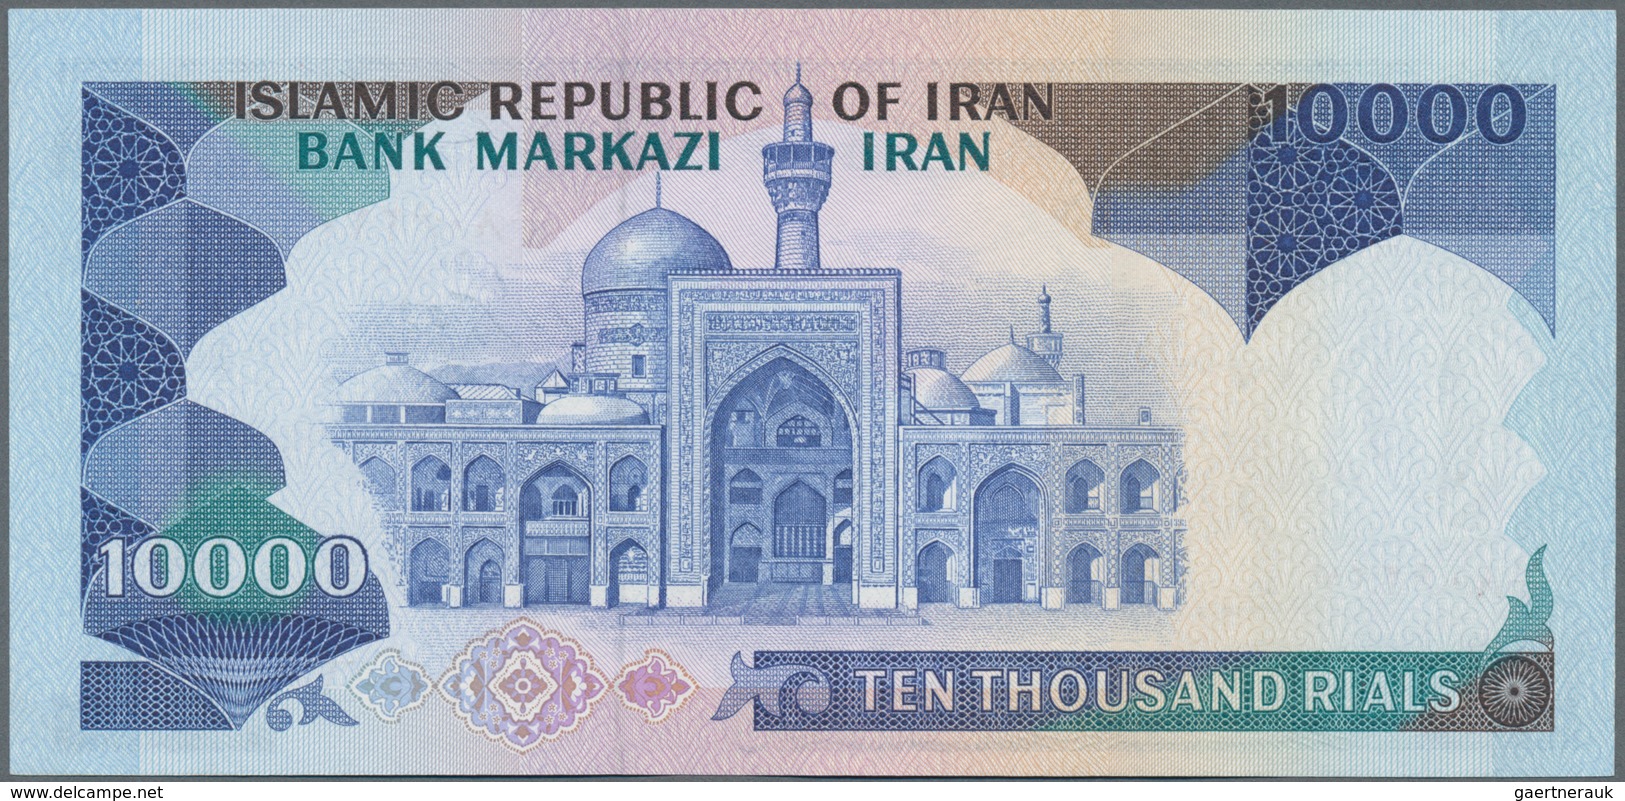 Iran: Islamic Republic of Iran – Bank Markazi Iran, nice set with 7 banknotes series ND(1981) with 5